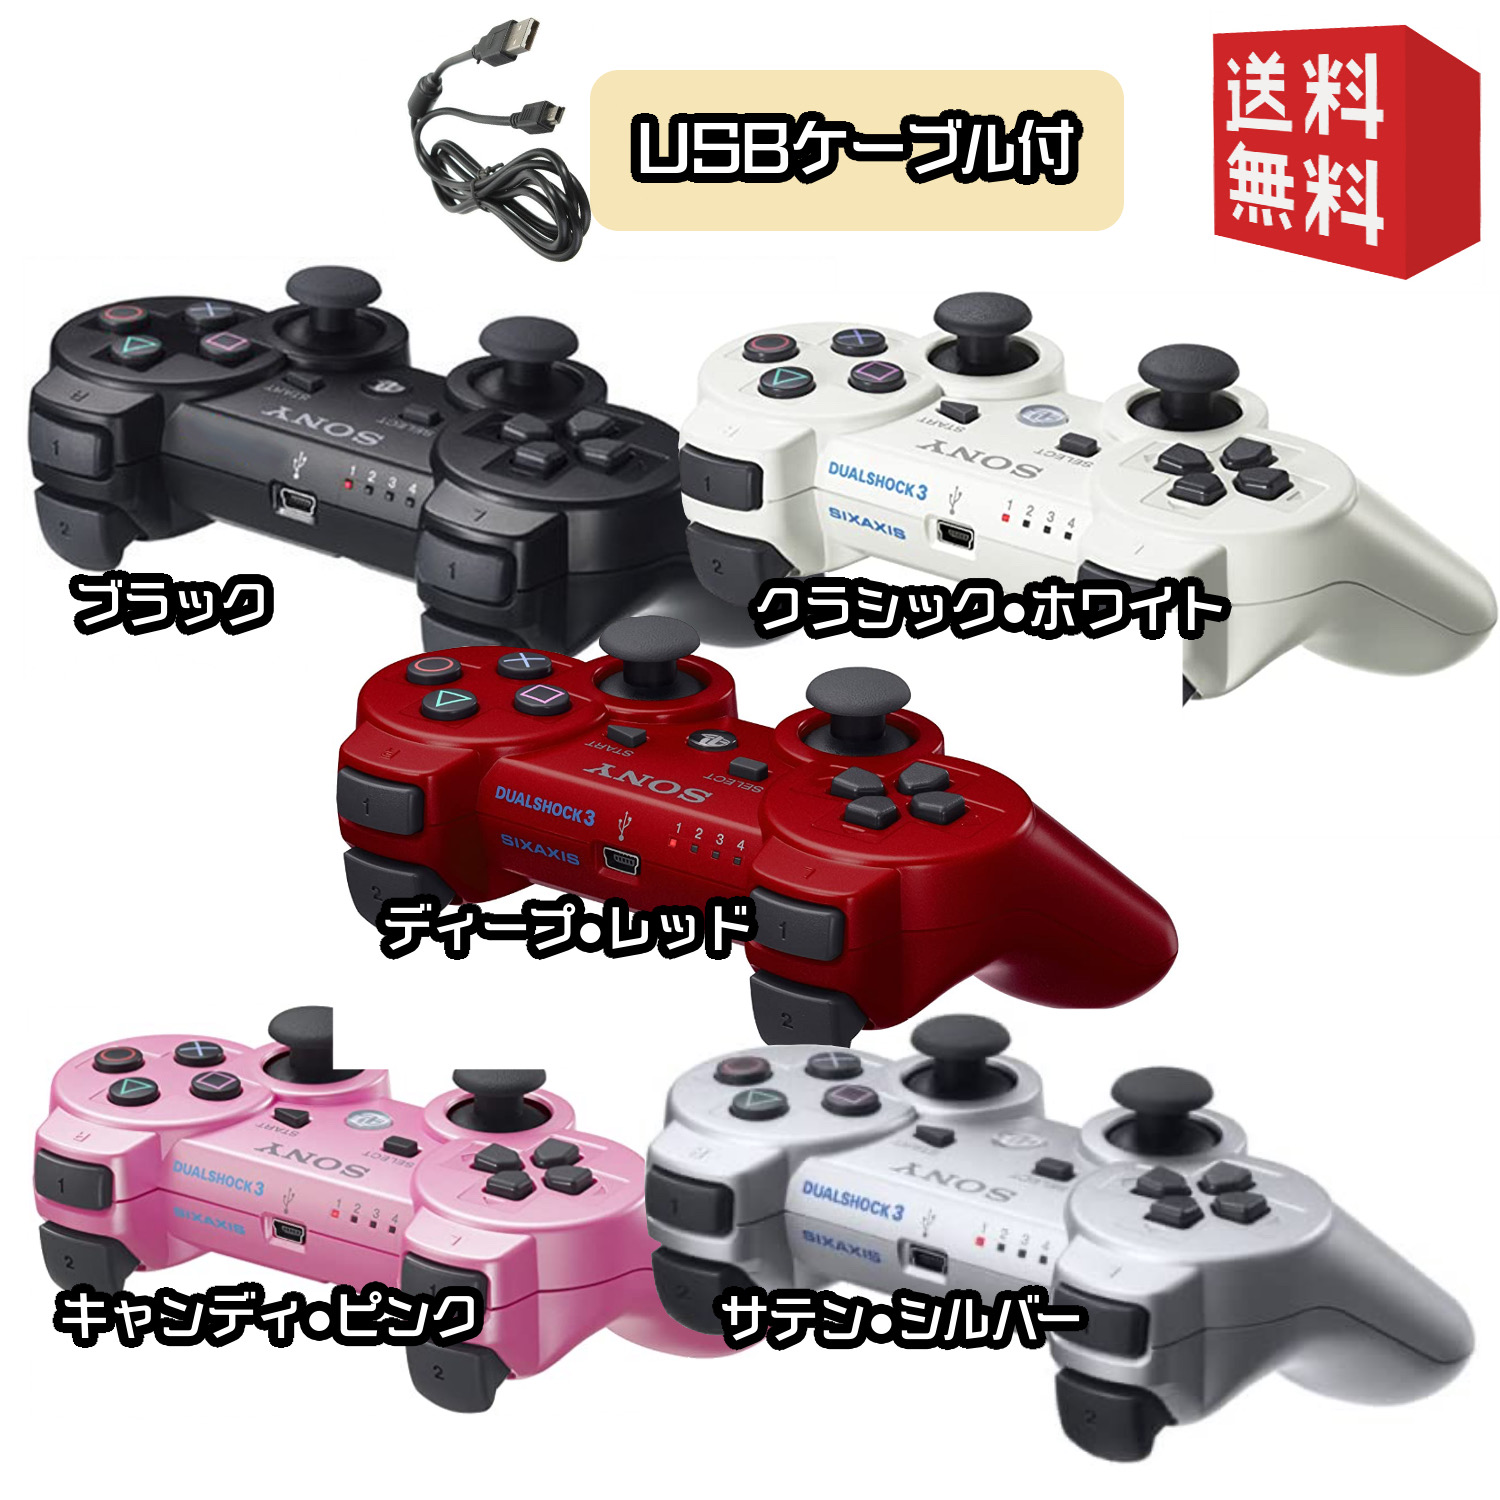 PS3 ワイヤレスコントローラ DUALSHOCK3 USBケーブル付 予約 正規販売店 選べるカラー５色